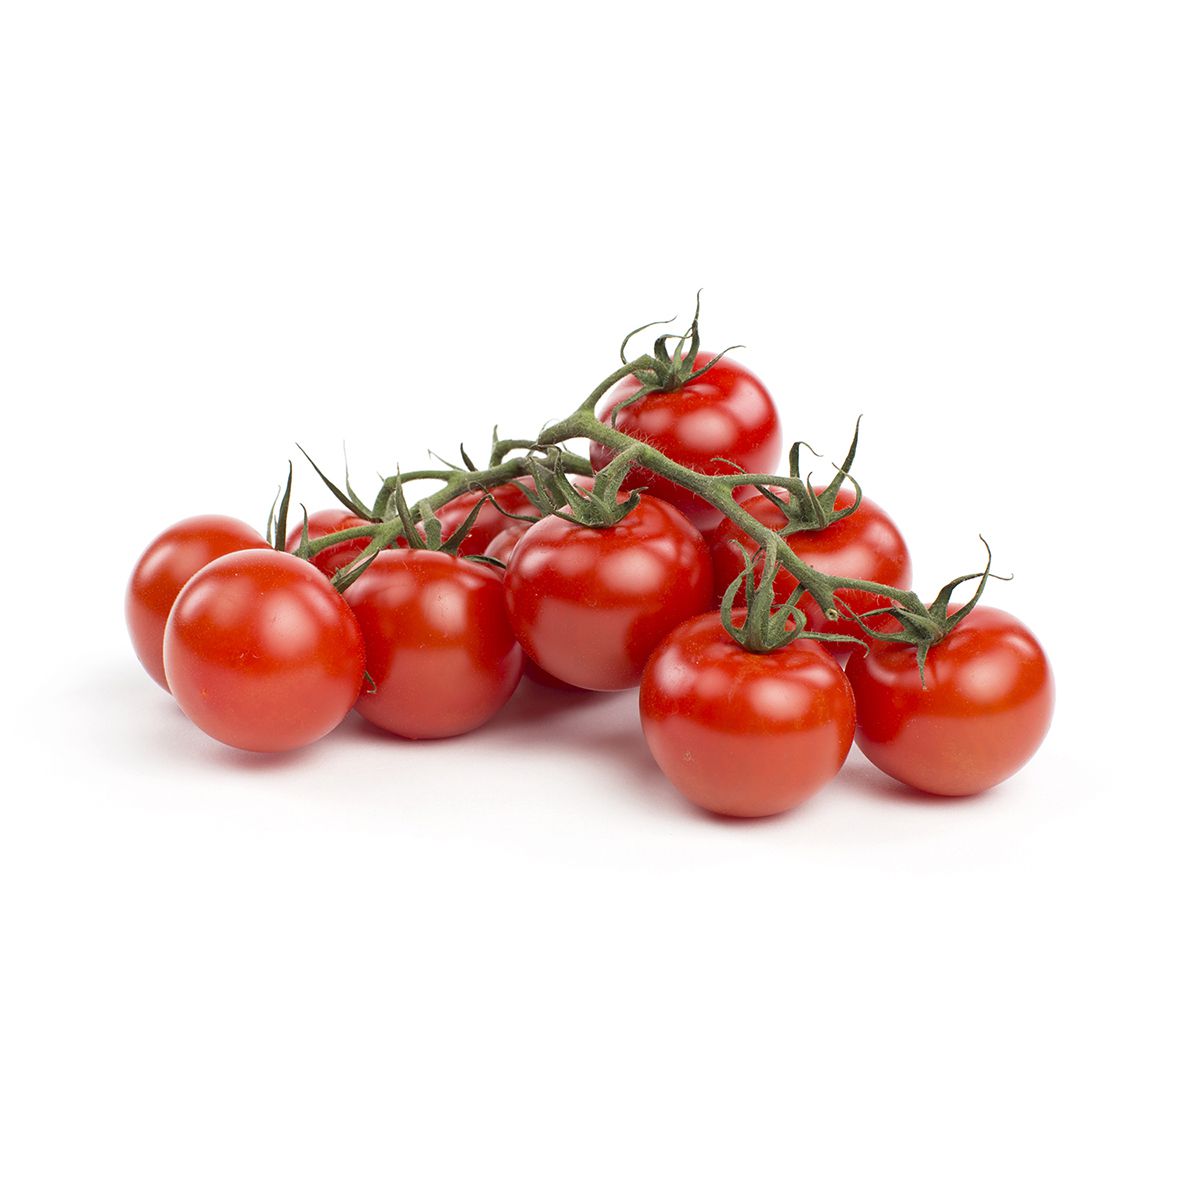 Backyard Farms Cherry Tomatoes on the Vine 10 Oz Box